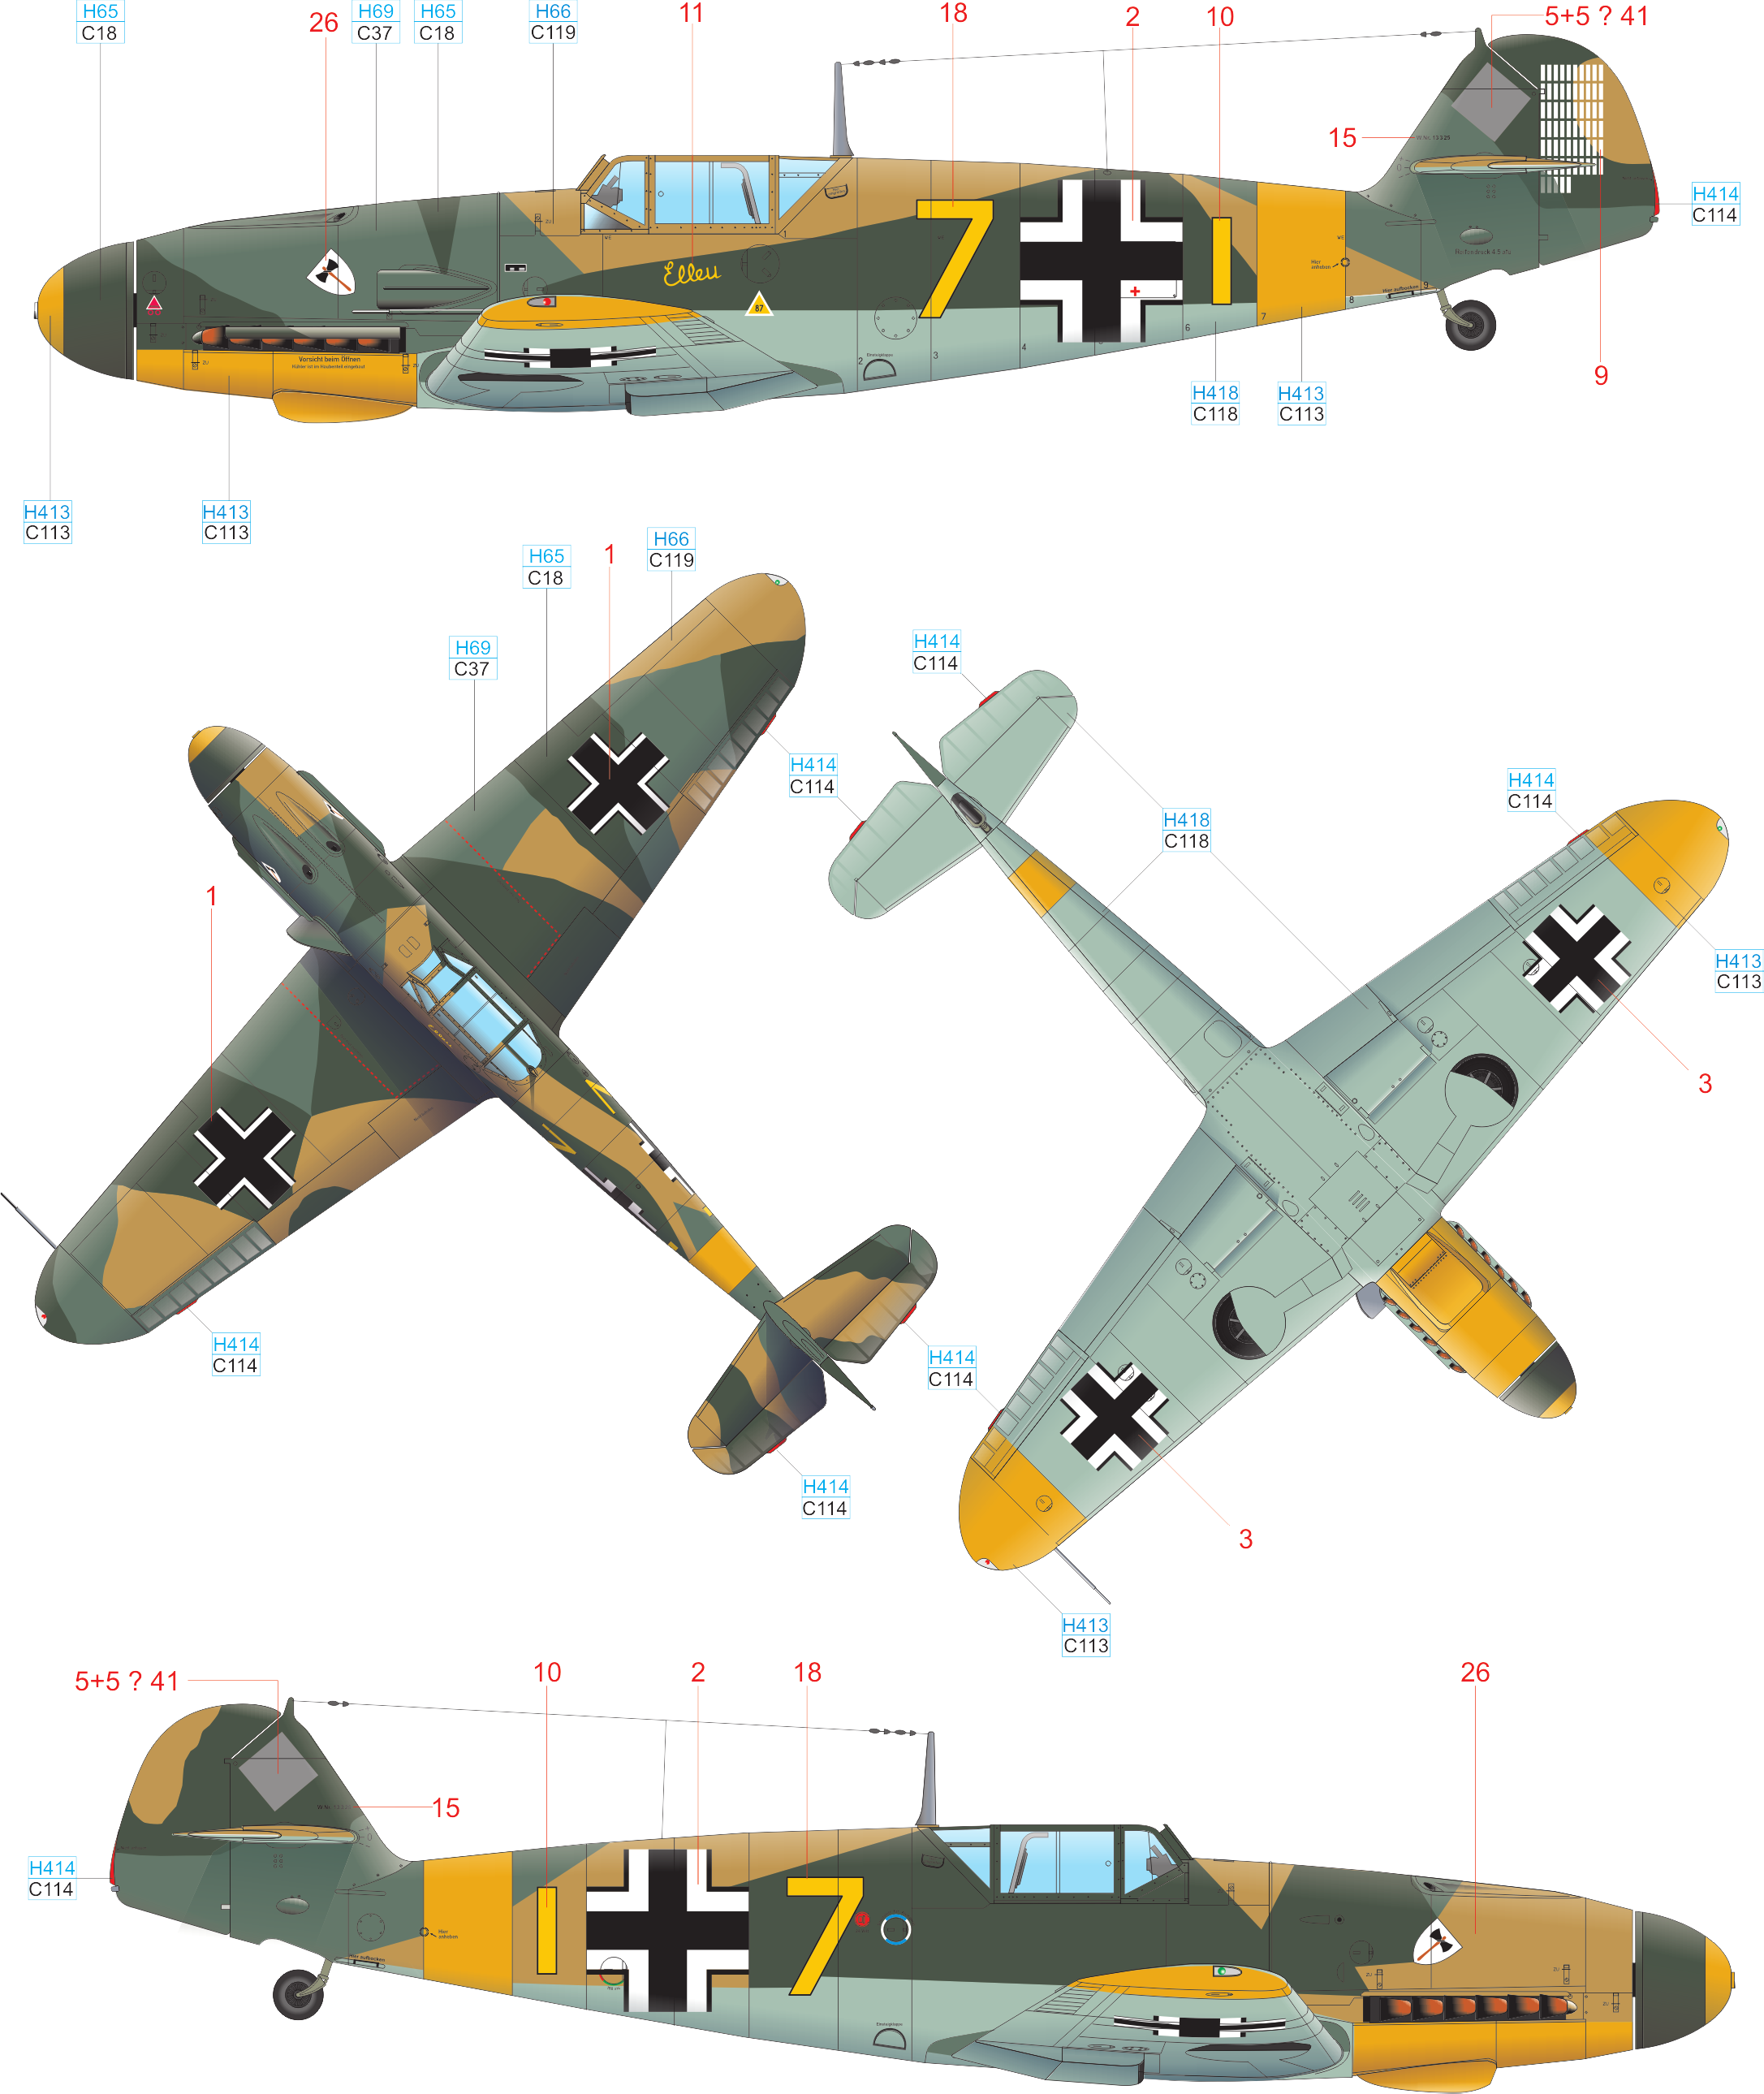 F Bf 109F-4, W. Nr. 13325, Oblt. Viktor Bauer, 9.